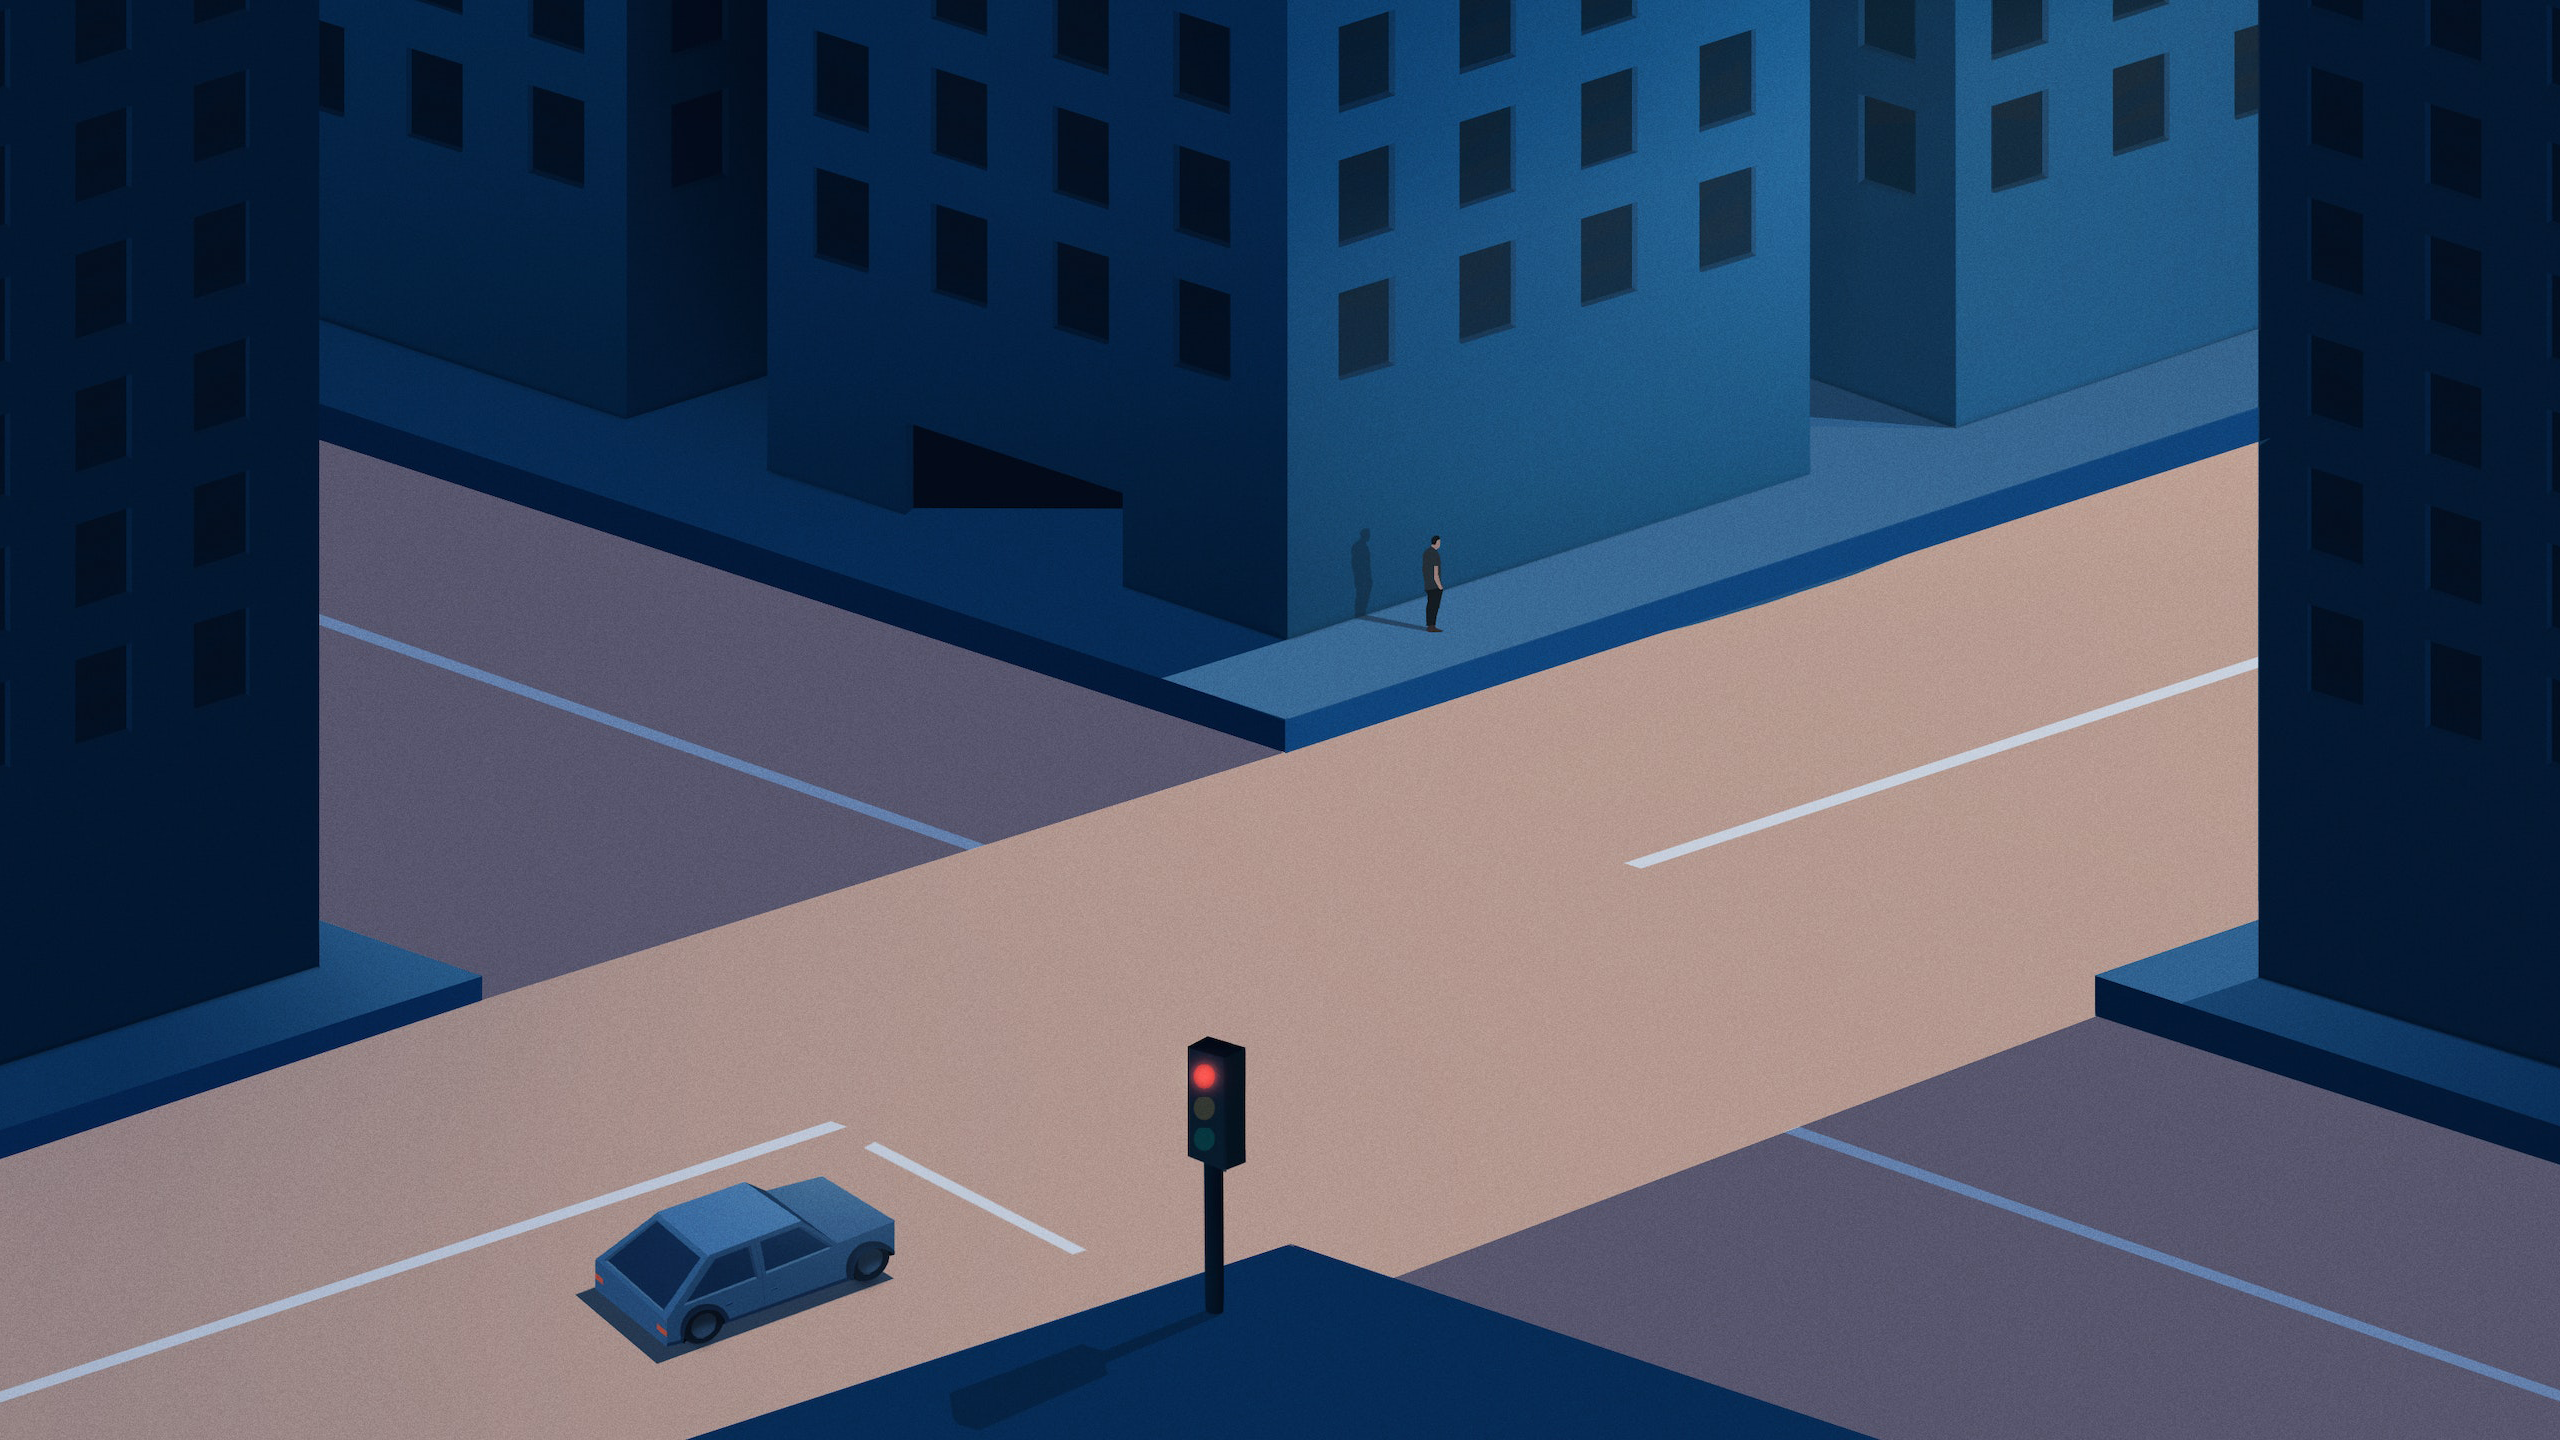 General 2560x1440 digital art artwork illustration minimalism 2K street road sunlight traffic lights building car simple background